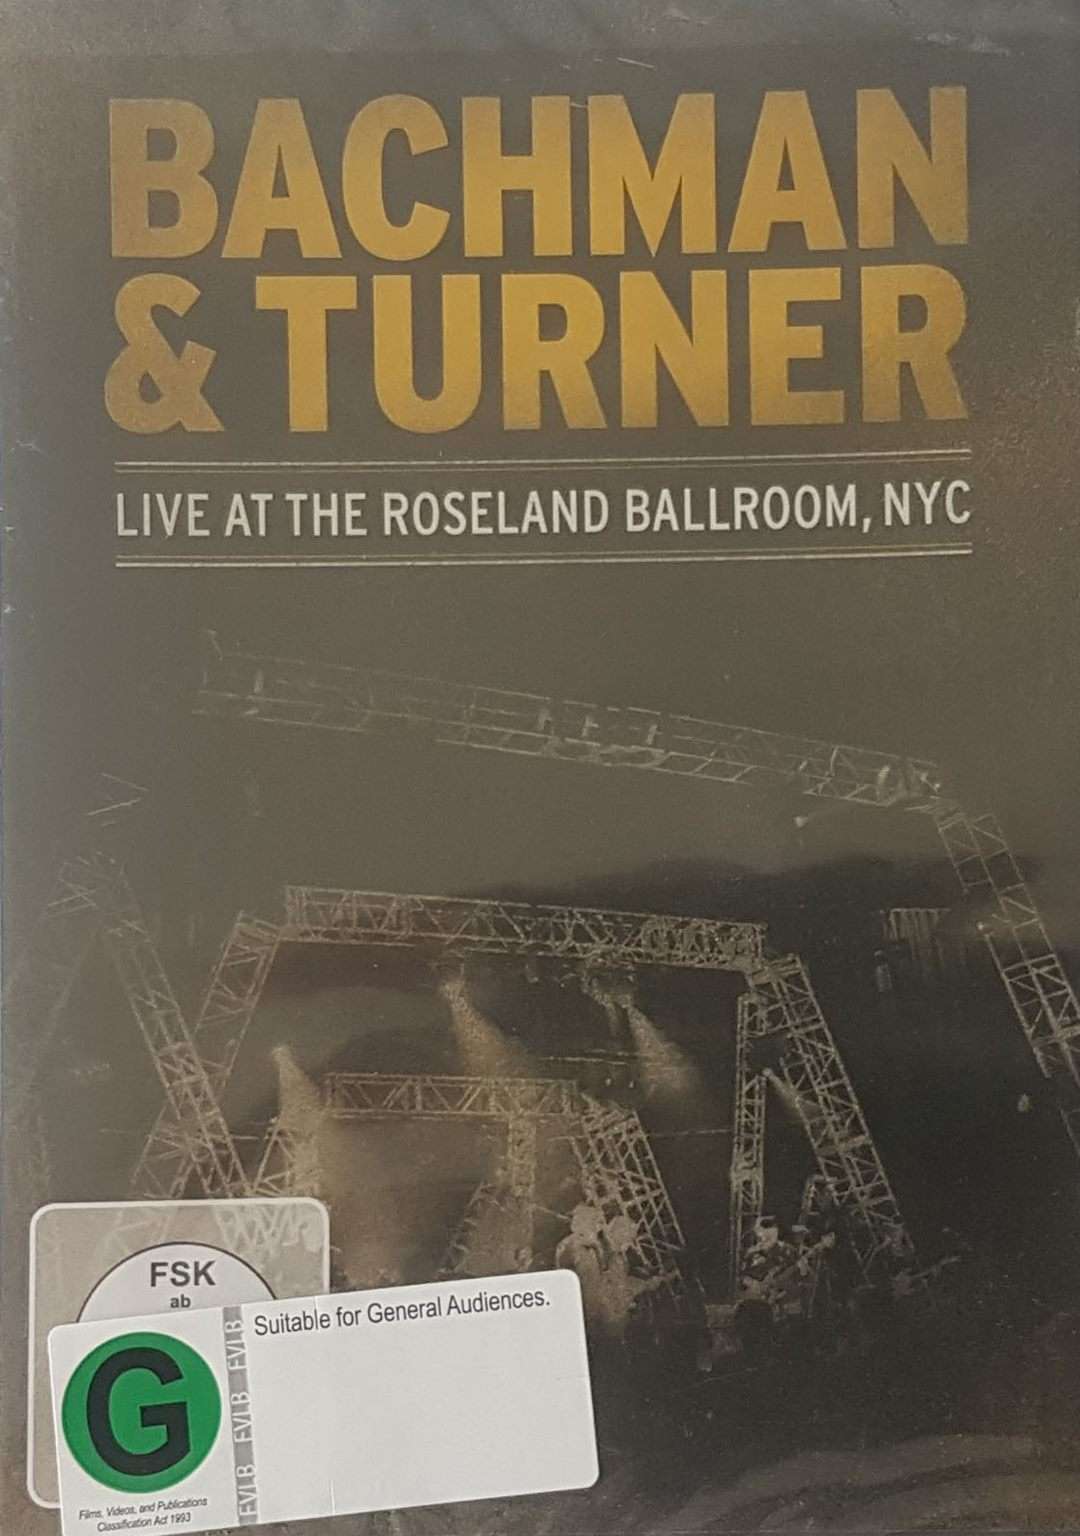 Bachman & Turner: Live at the Roseland Ballroom, NYC